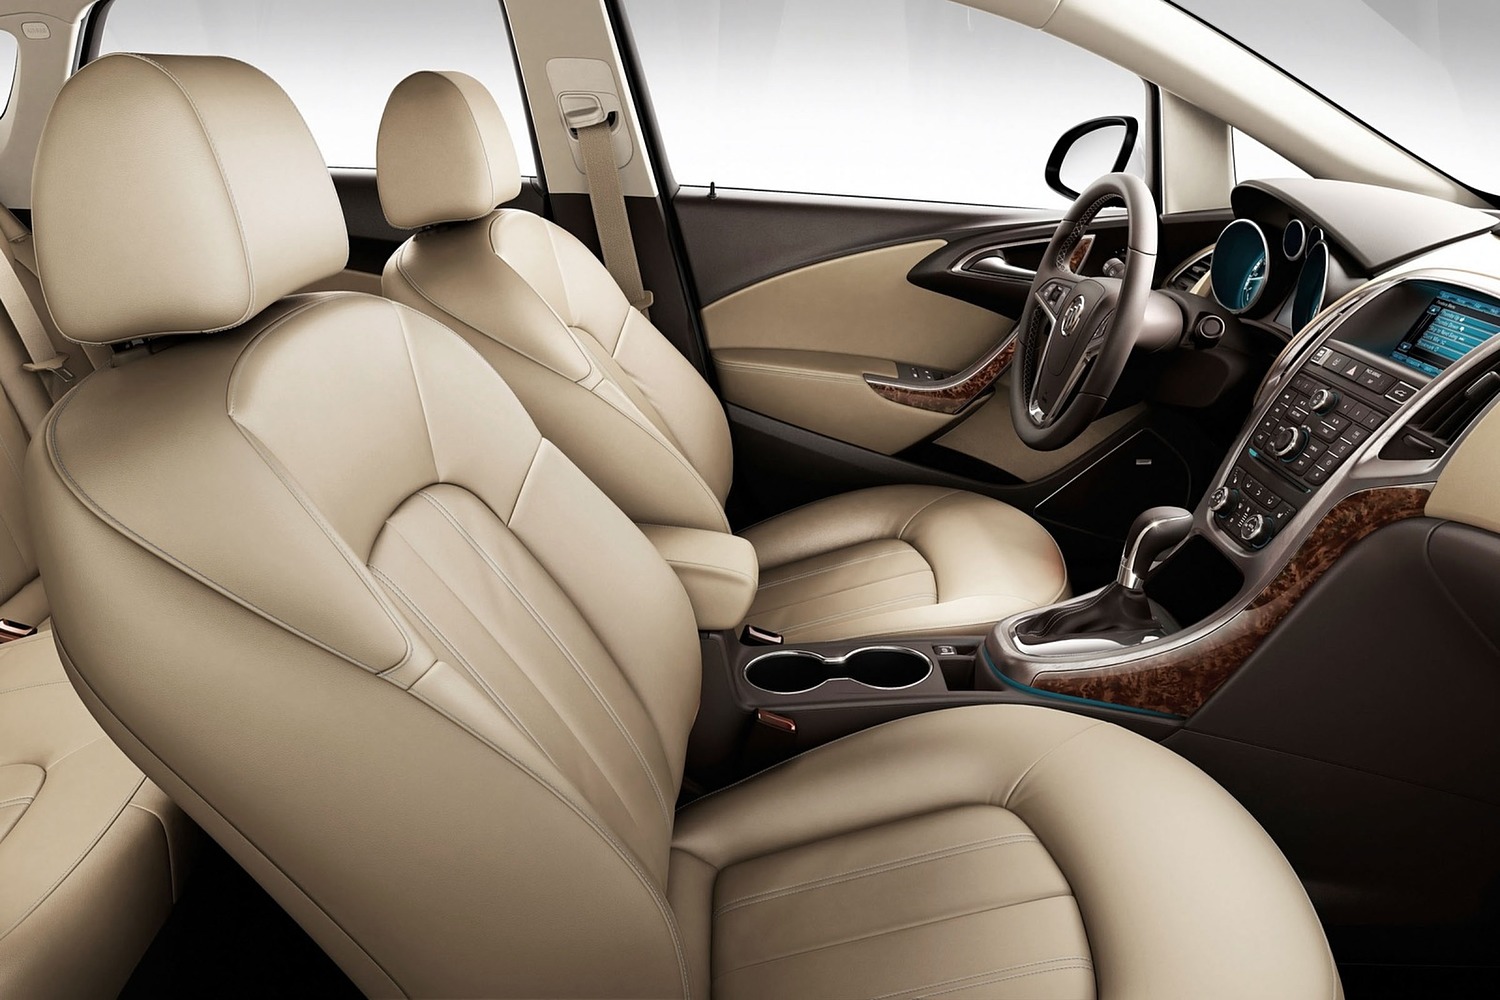 Buick Verano Leather Group Sedan Interior (2015 model year shown)